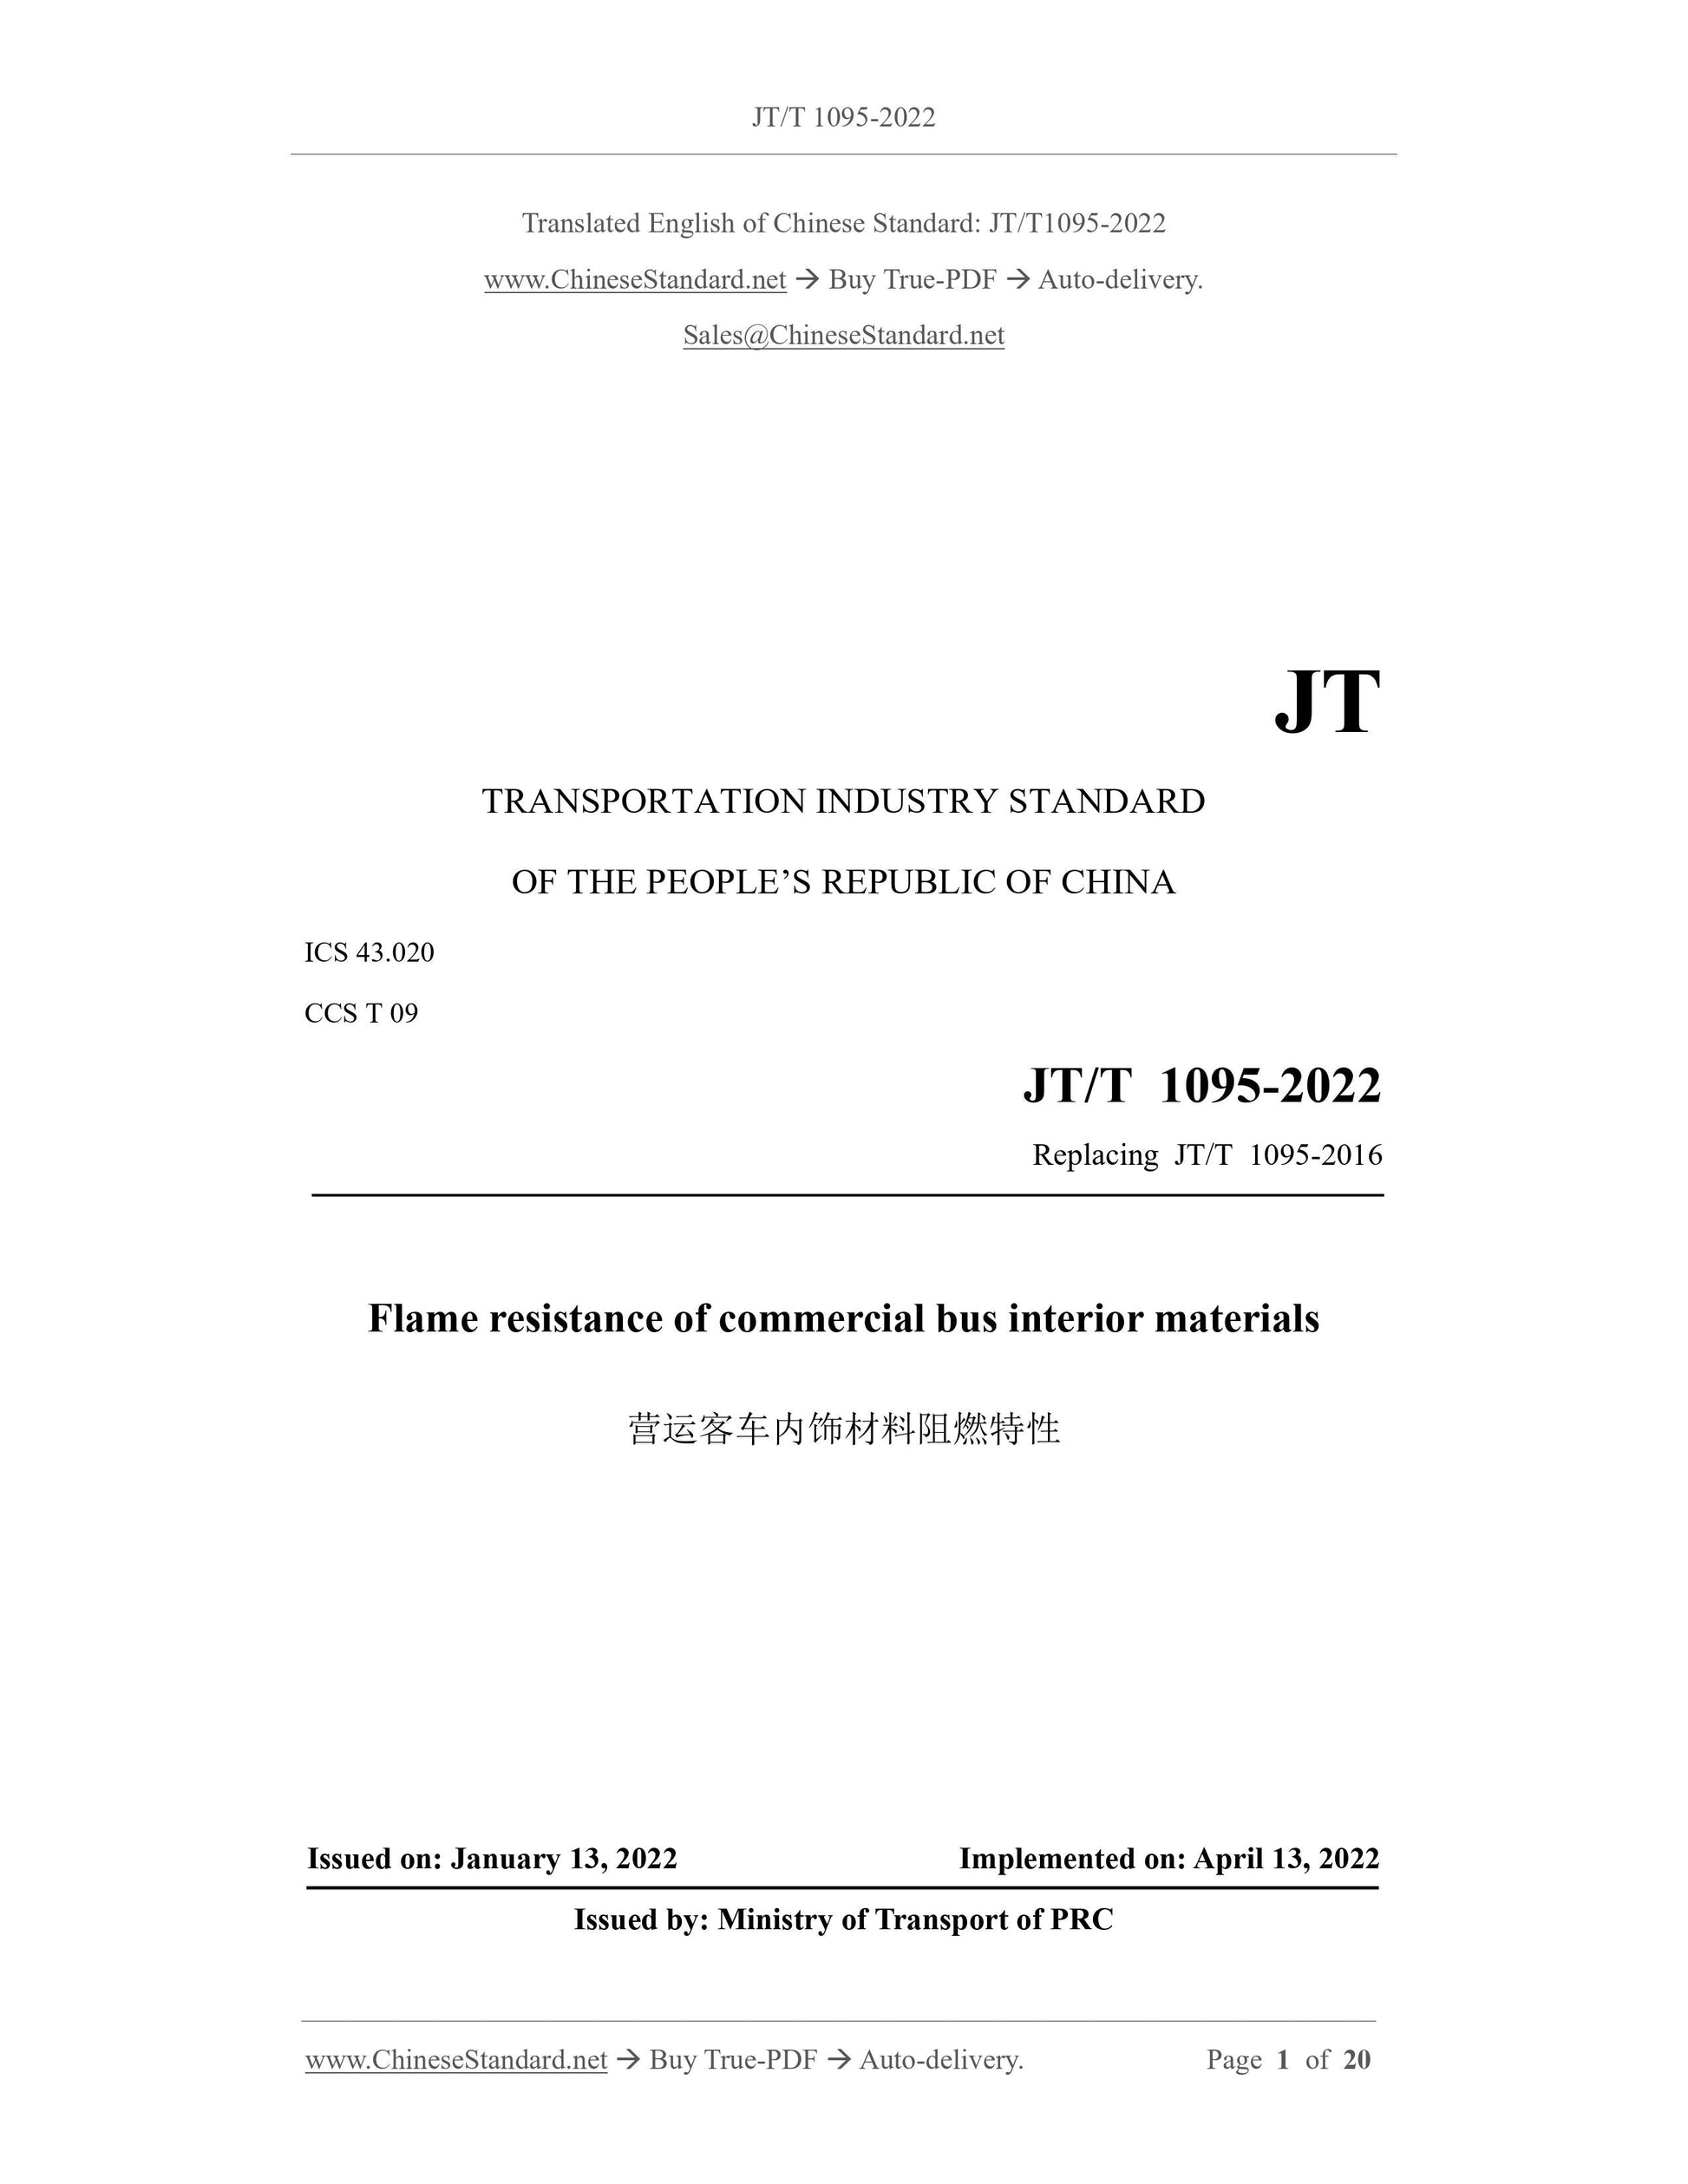 JT/T 1095-2022 Page 1